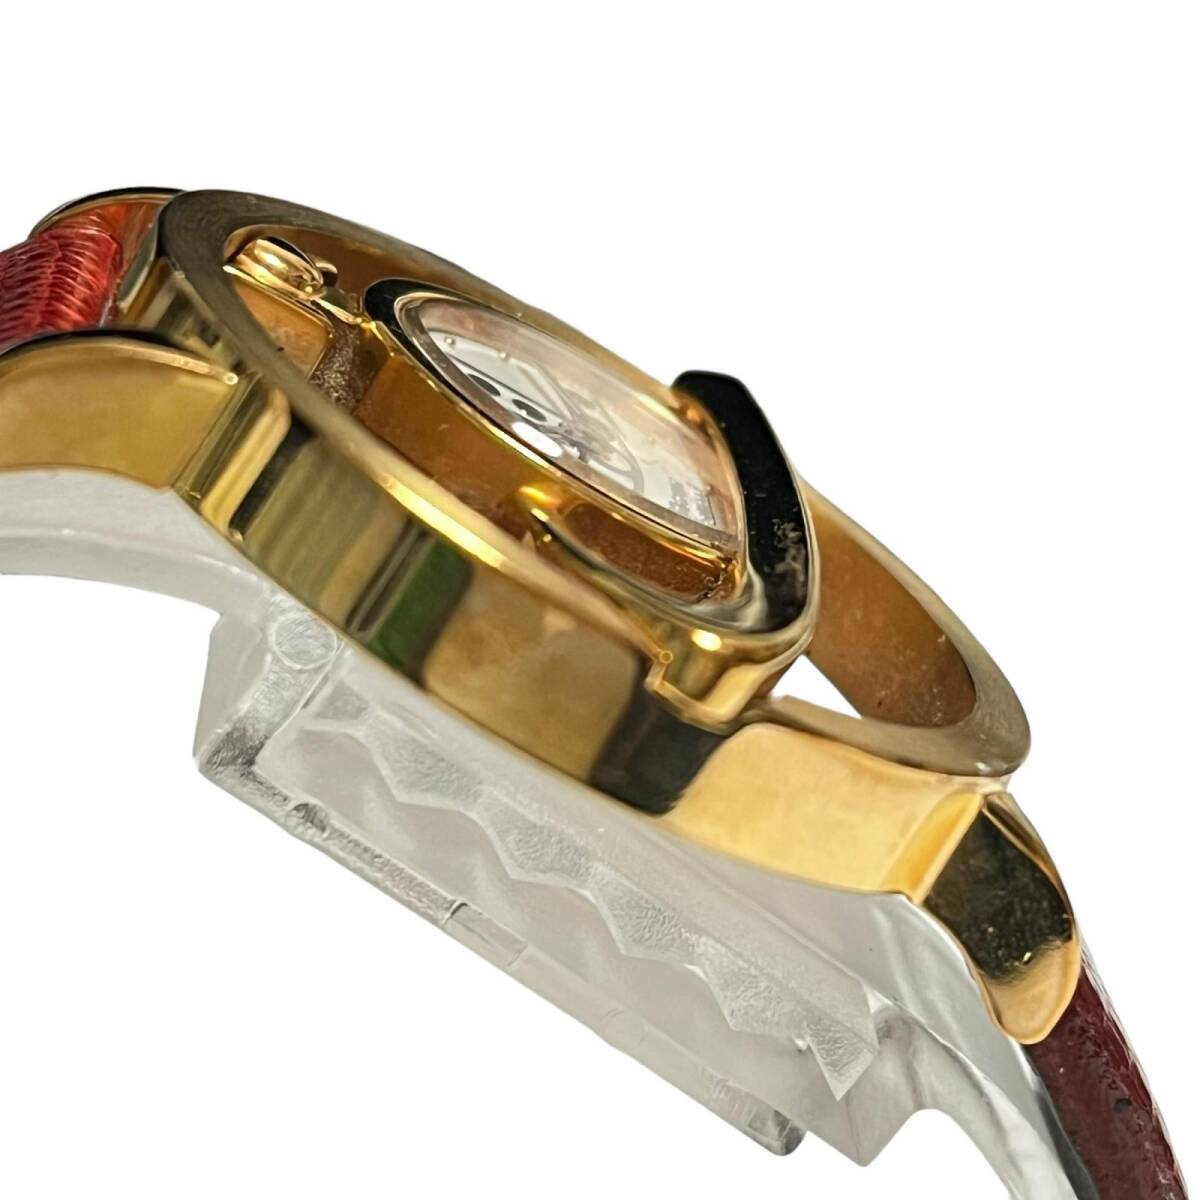 Vivienne Westwood ヴィヴィアンウエストウッド 腕時計 サークルオーブ ボルドー クロノグラフ クォーツ VW77A3 B8592 レディース_画像3